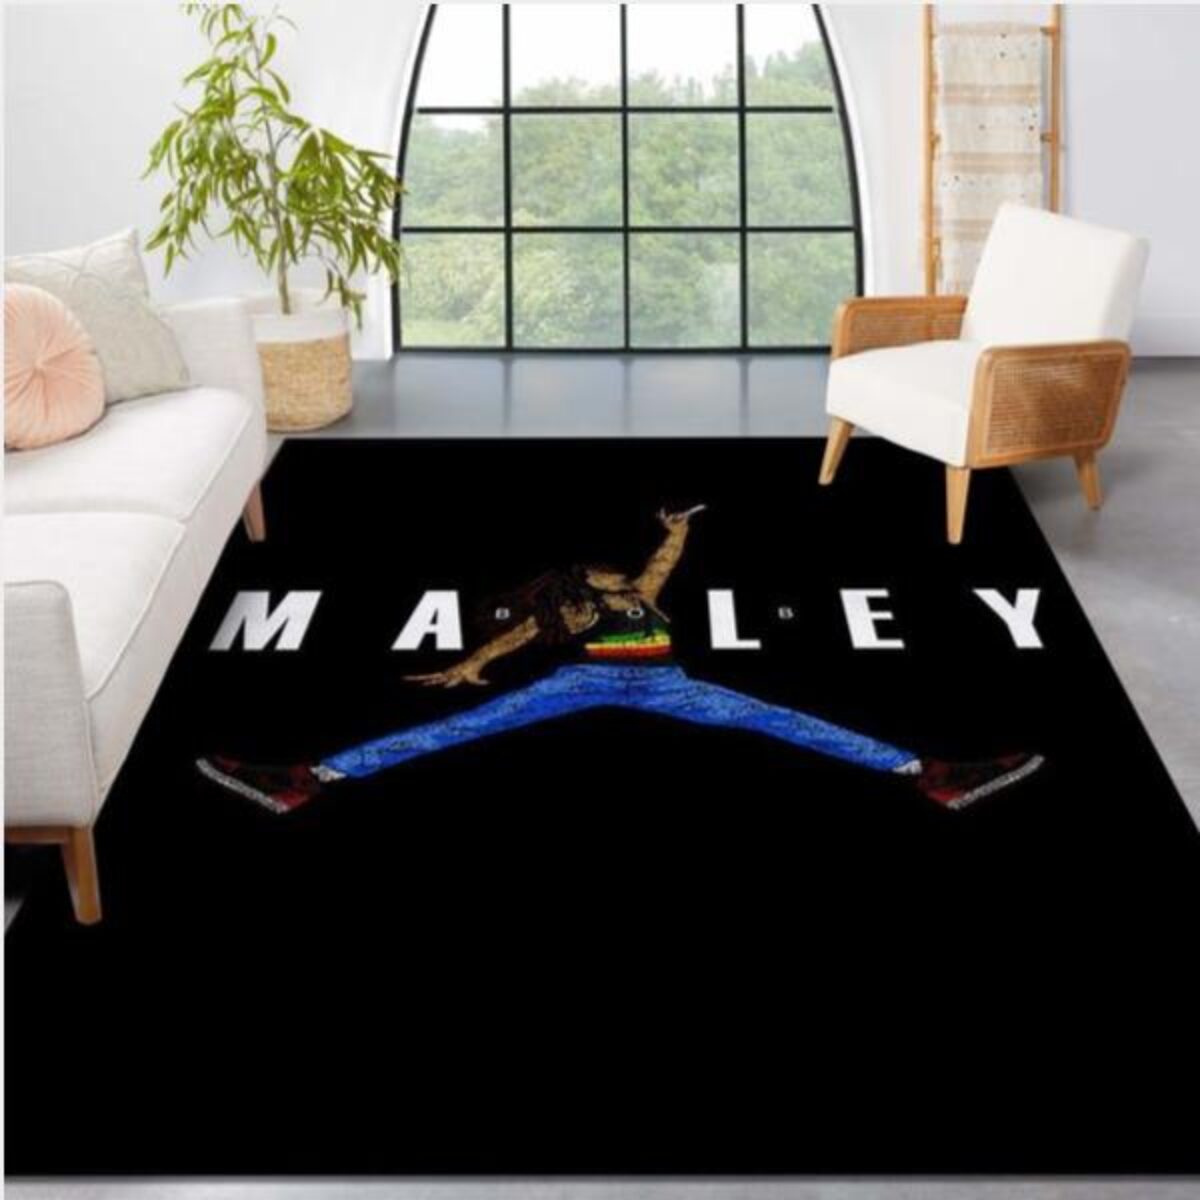 Bob Marley Jumpman Jordan Rug Living Room Home Decor Floor Peto Rugs